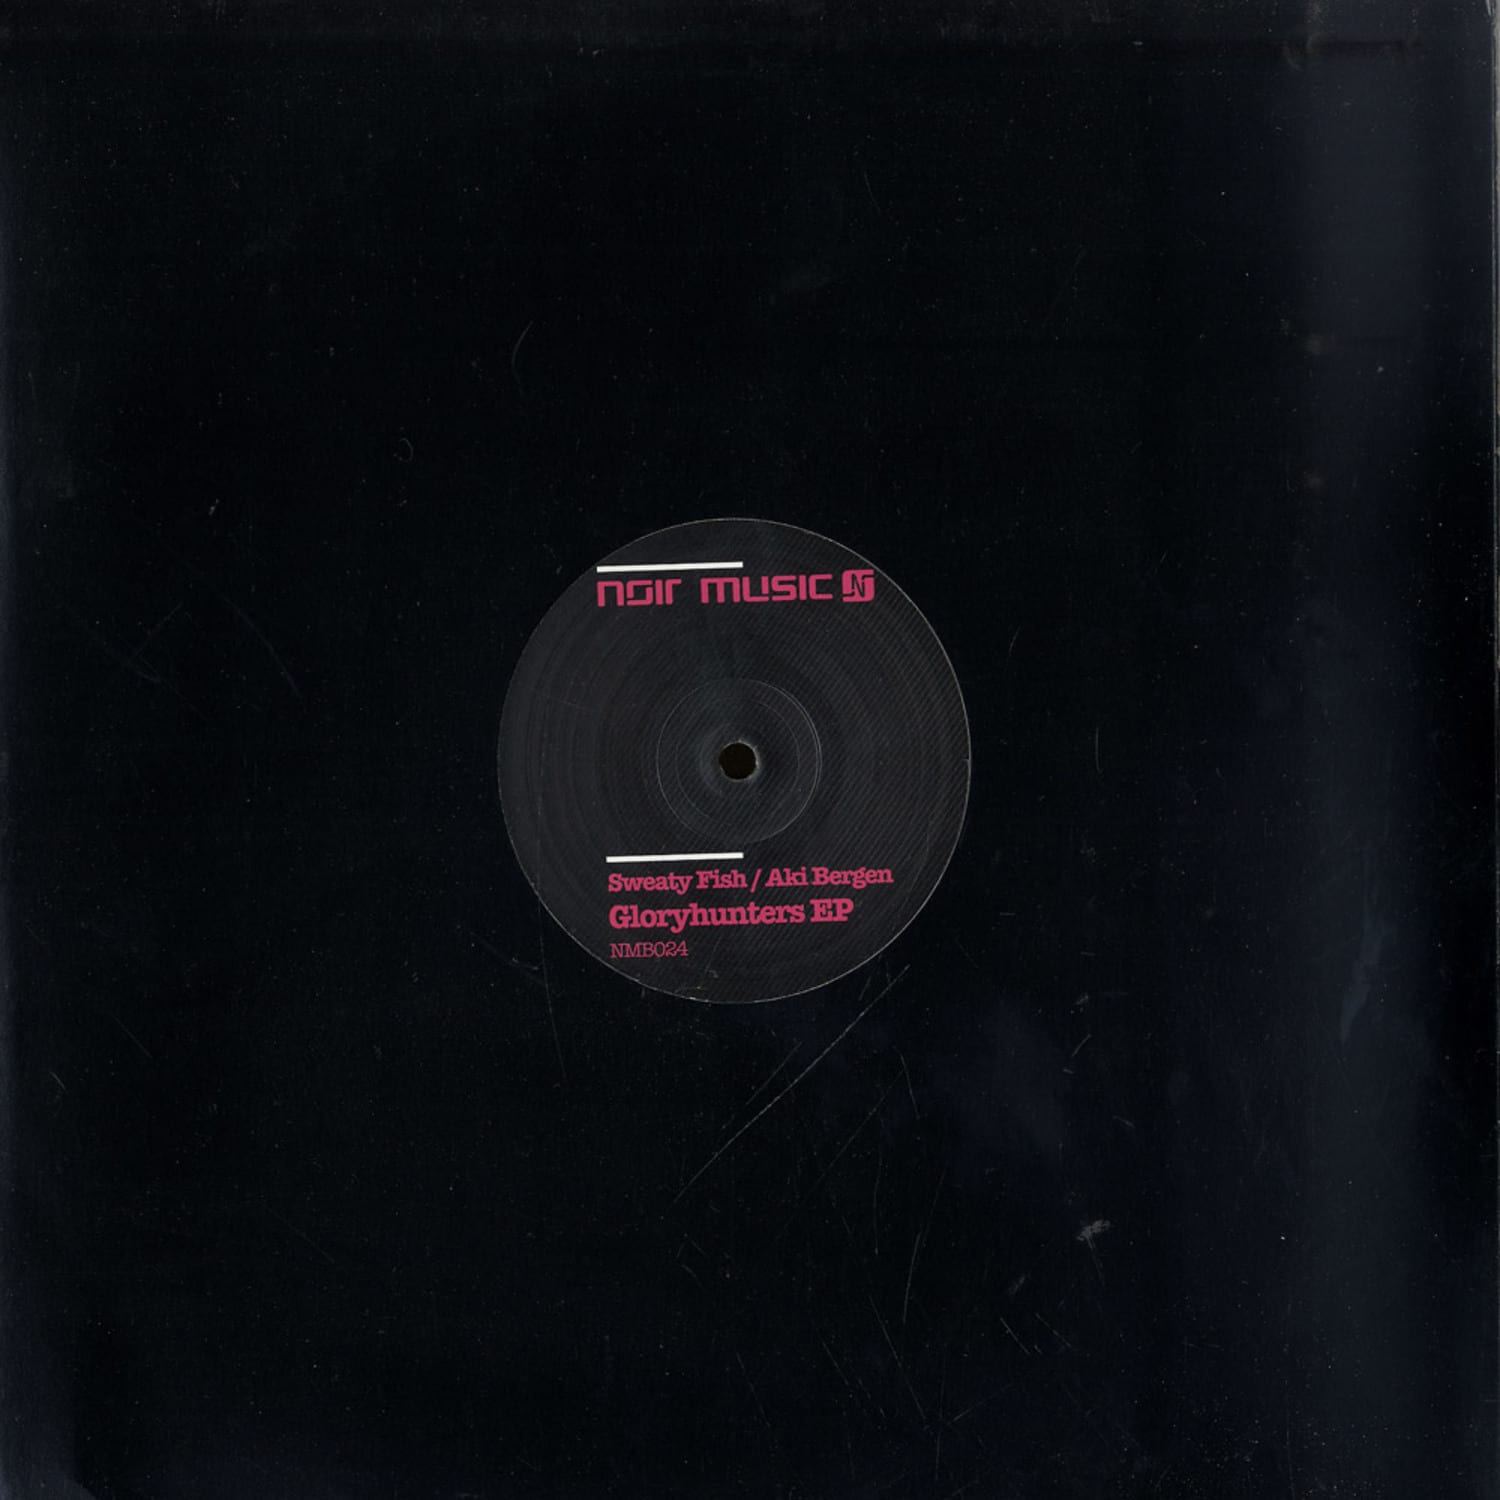 Sweaty Fish / Aki Bergen - GLORY HUNTERS EP